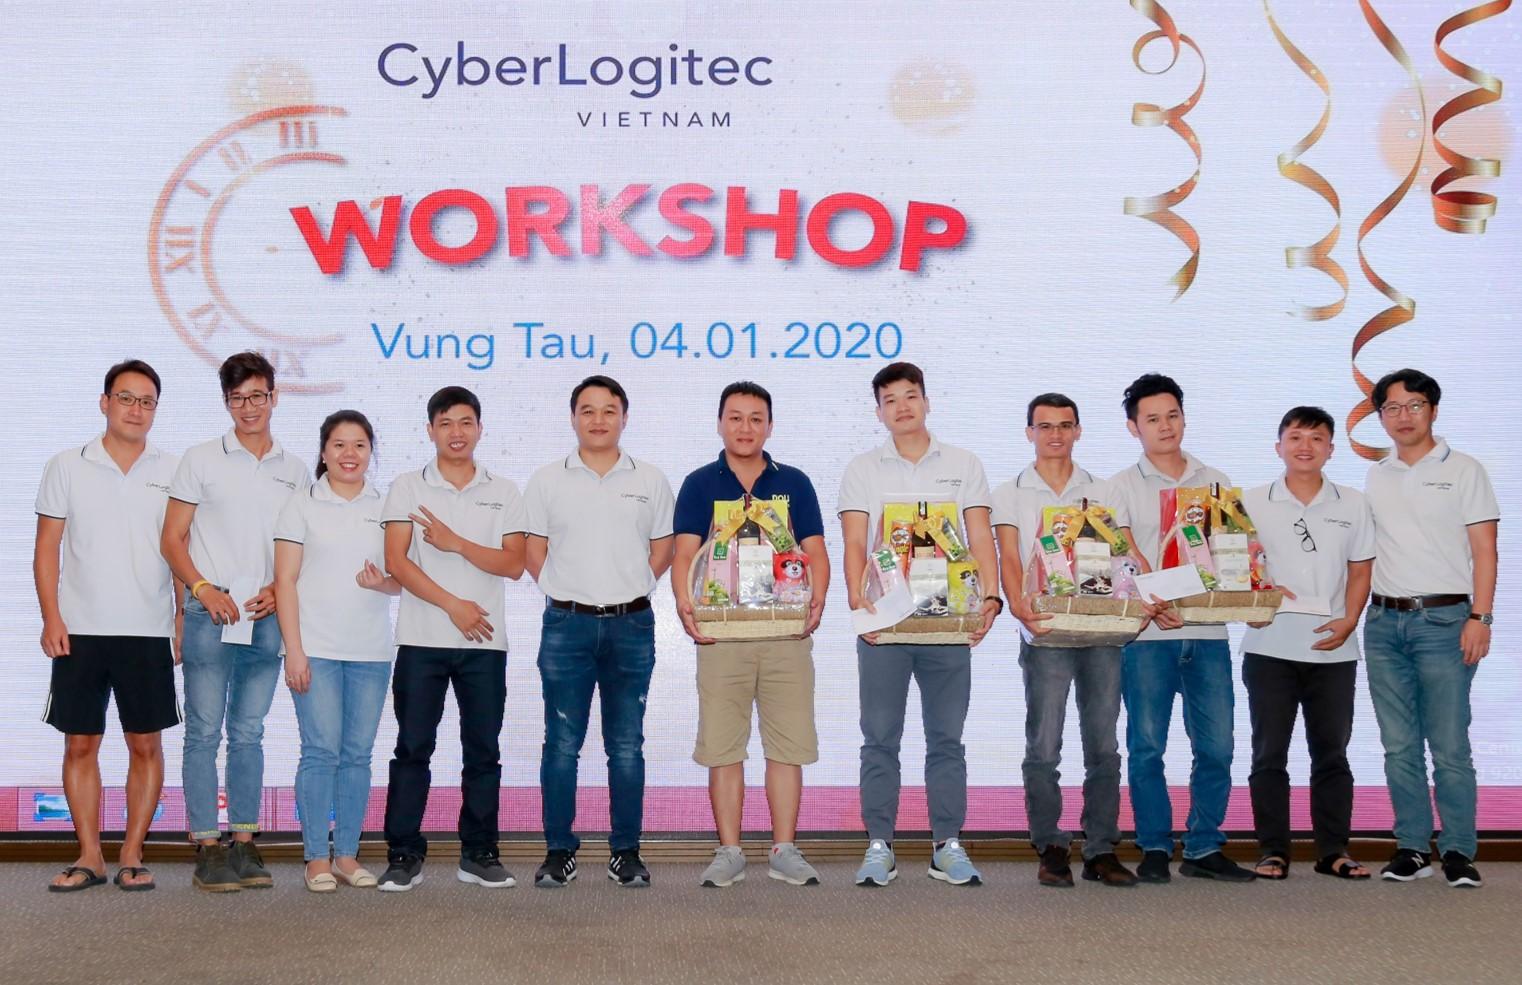 CyberLogitec Vietnam Co., Ltd.